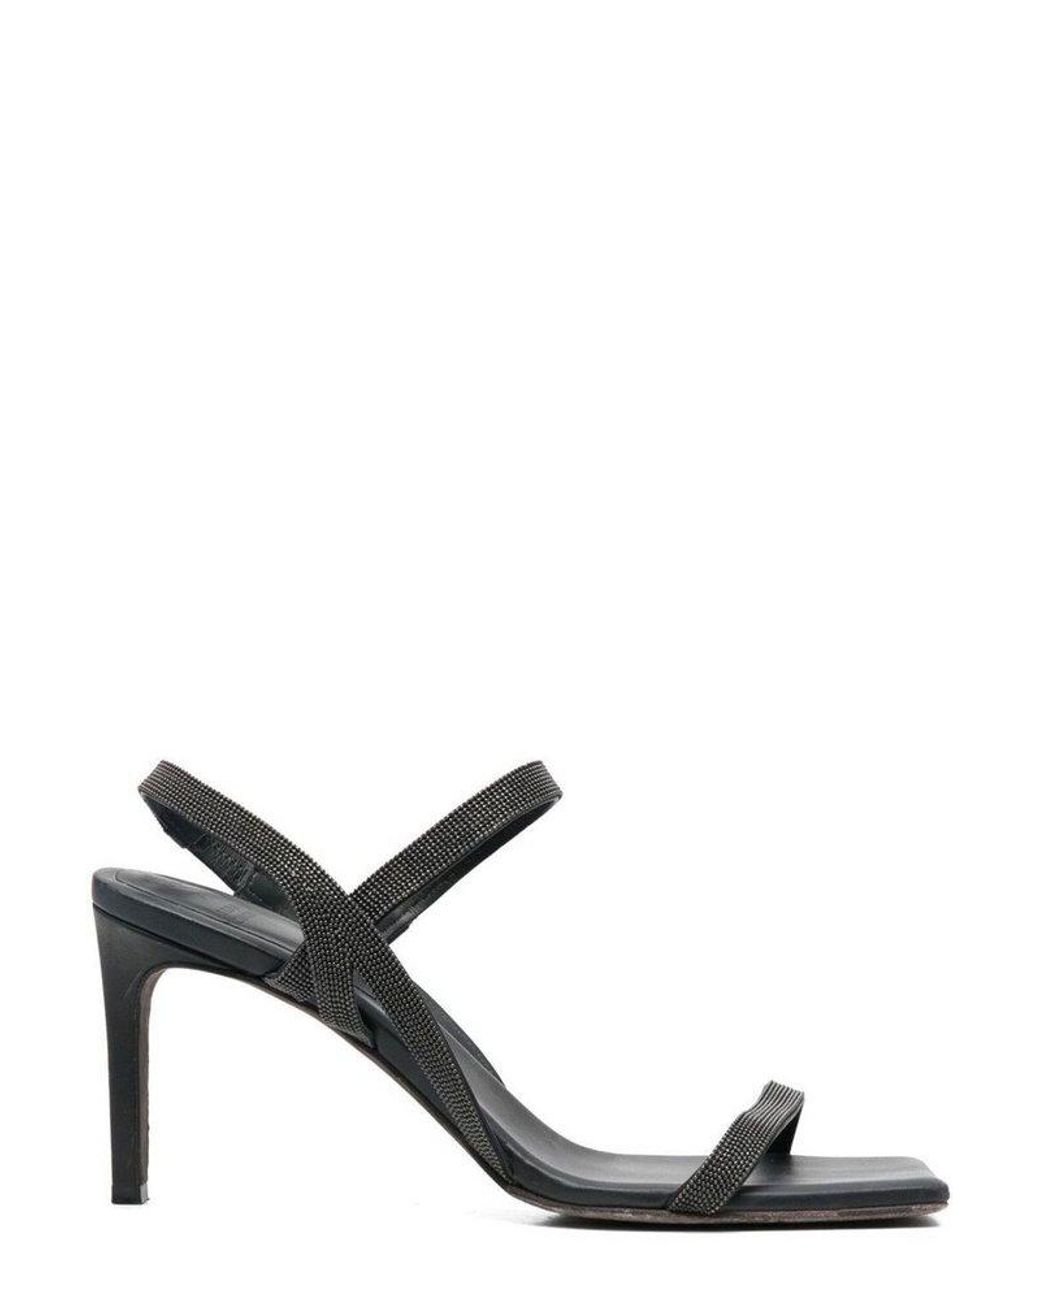 ZARA Black Block Heel Animal Print Strappy Sandals 2329 910 040 - Sz. 10  NEW | eBay